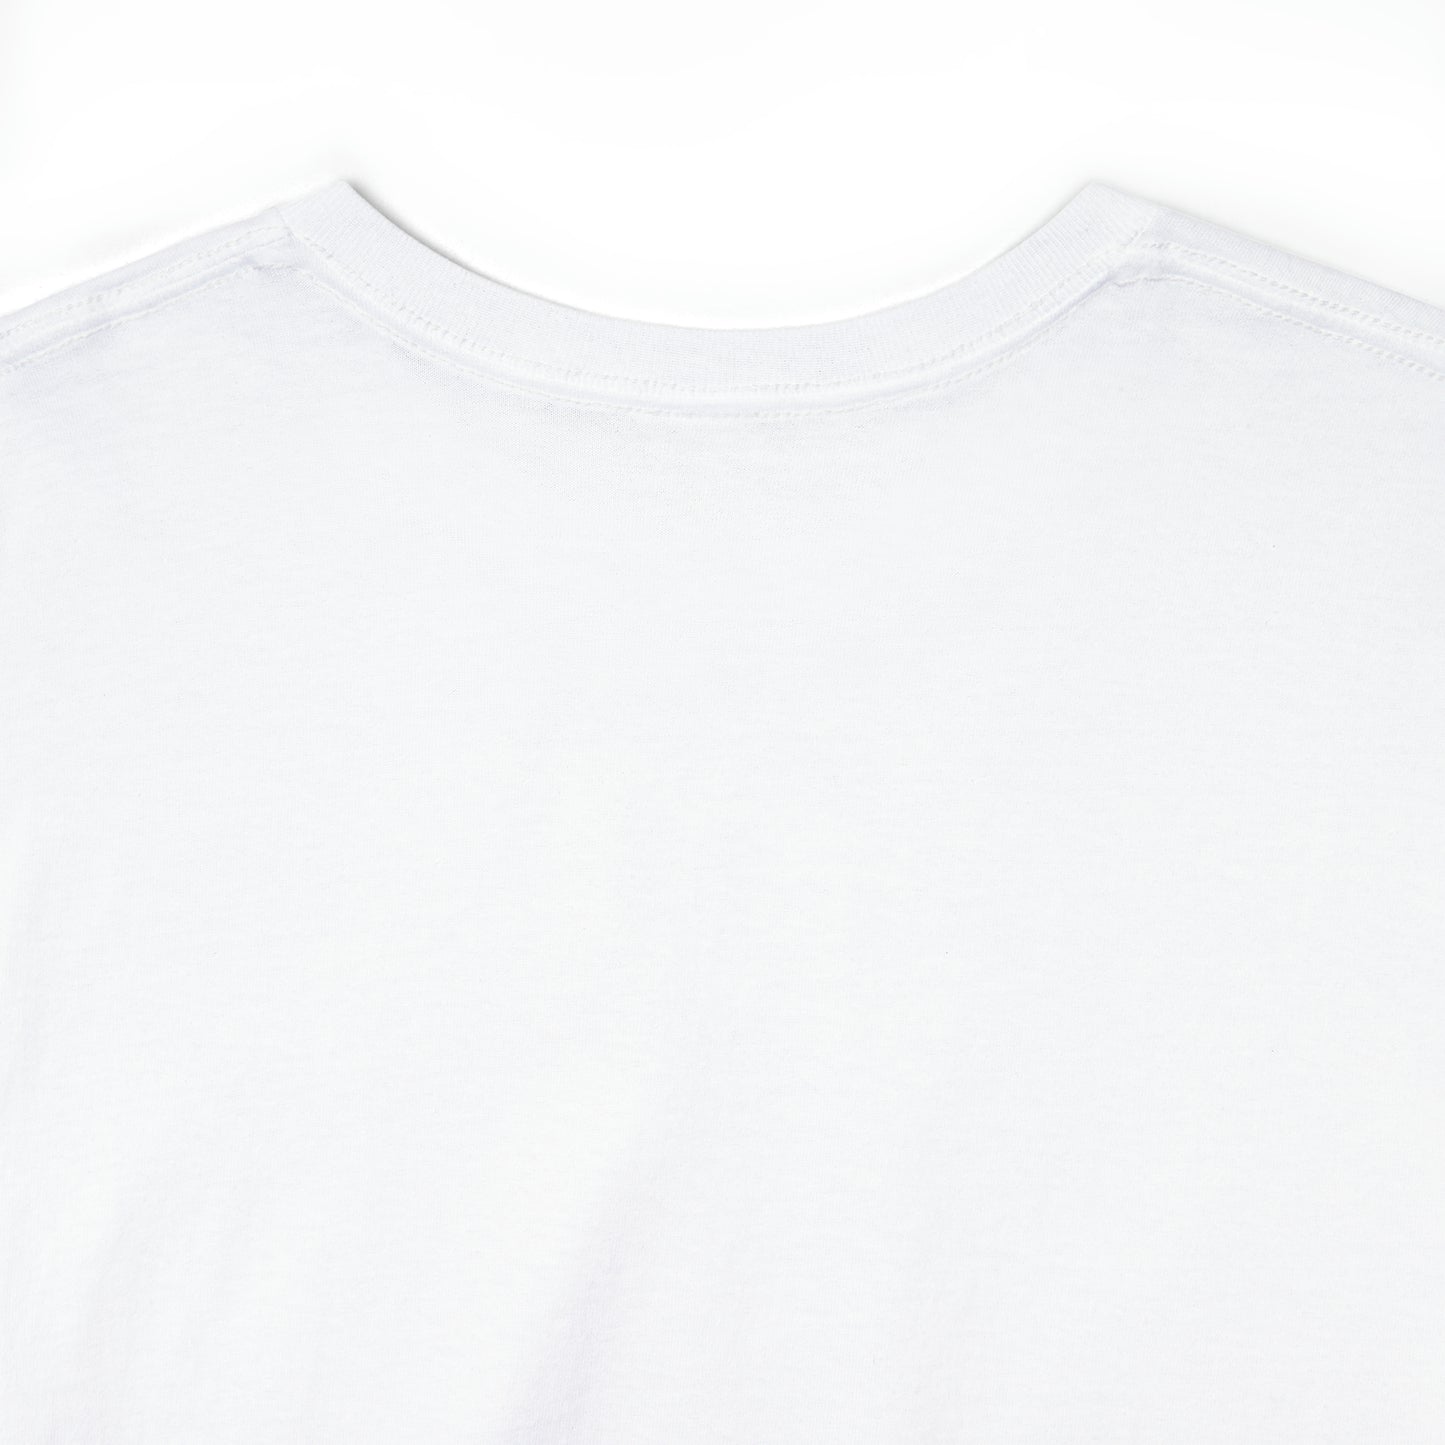 1 FC Nurnberg (1970's logo) Unisex Heavy Cotton T-shirt